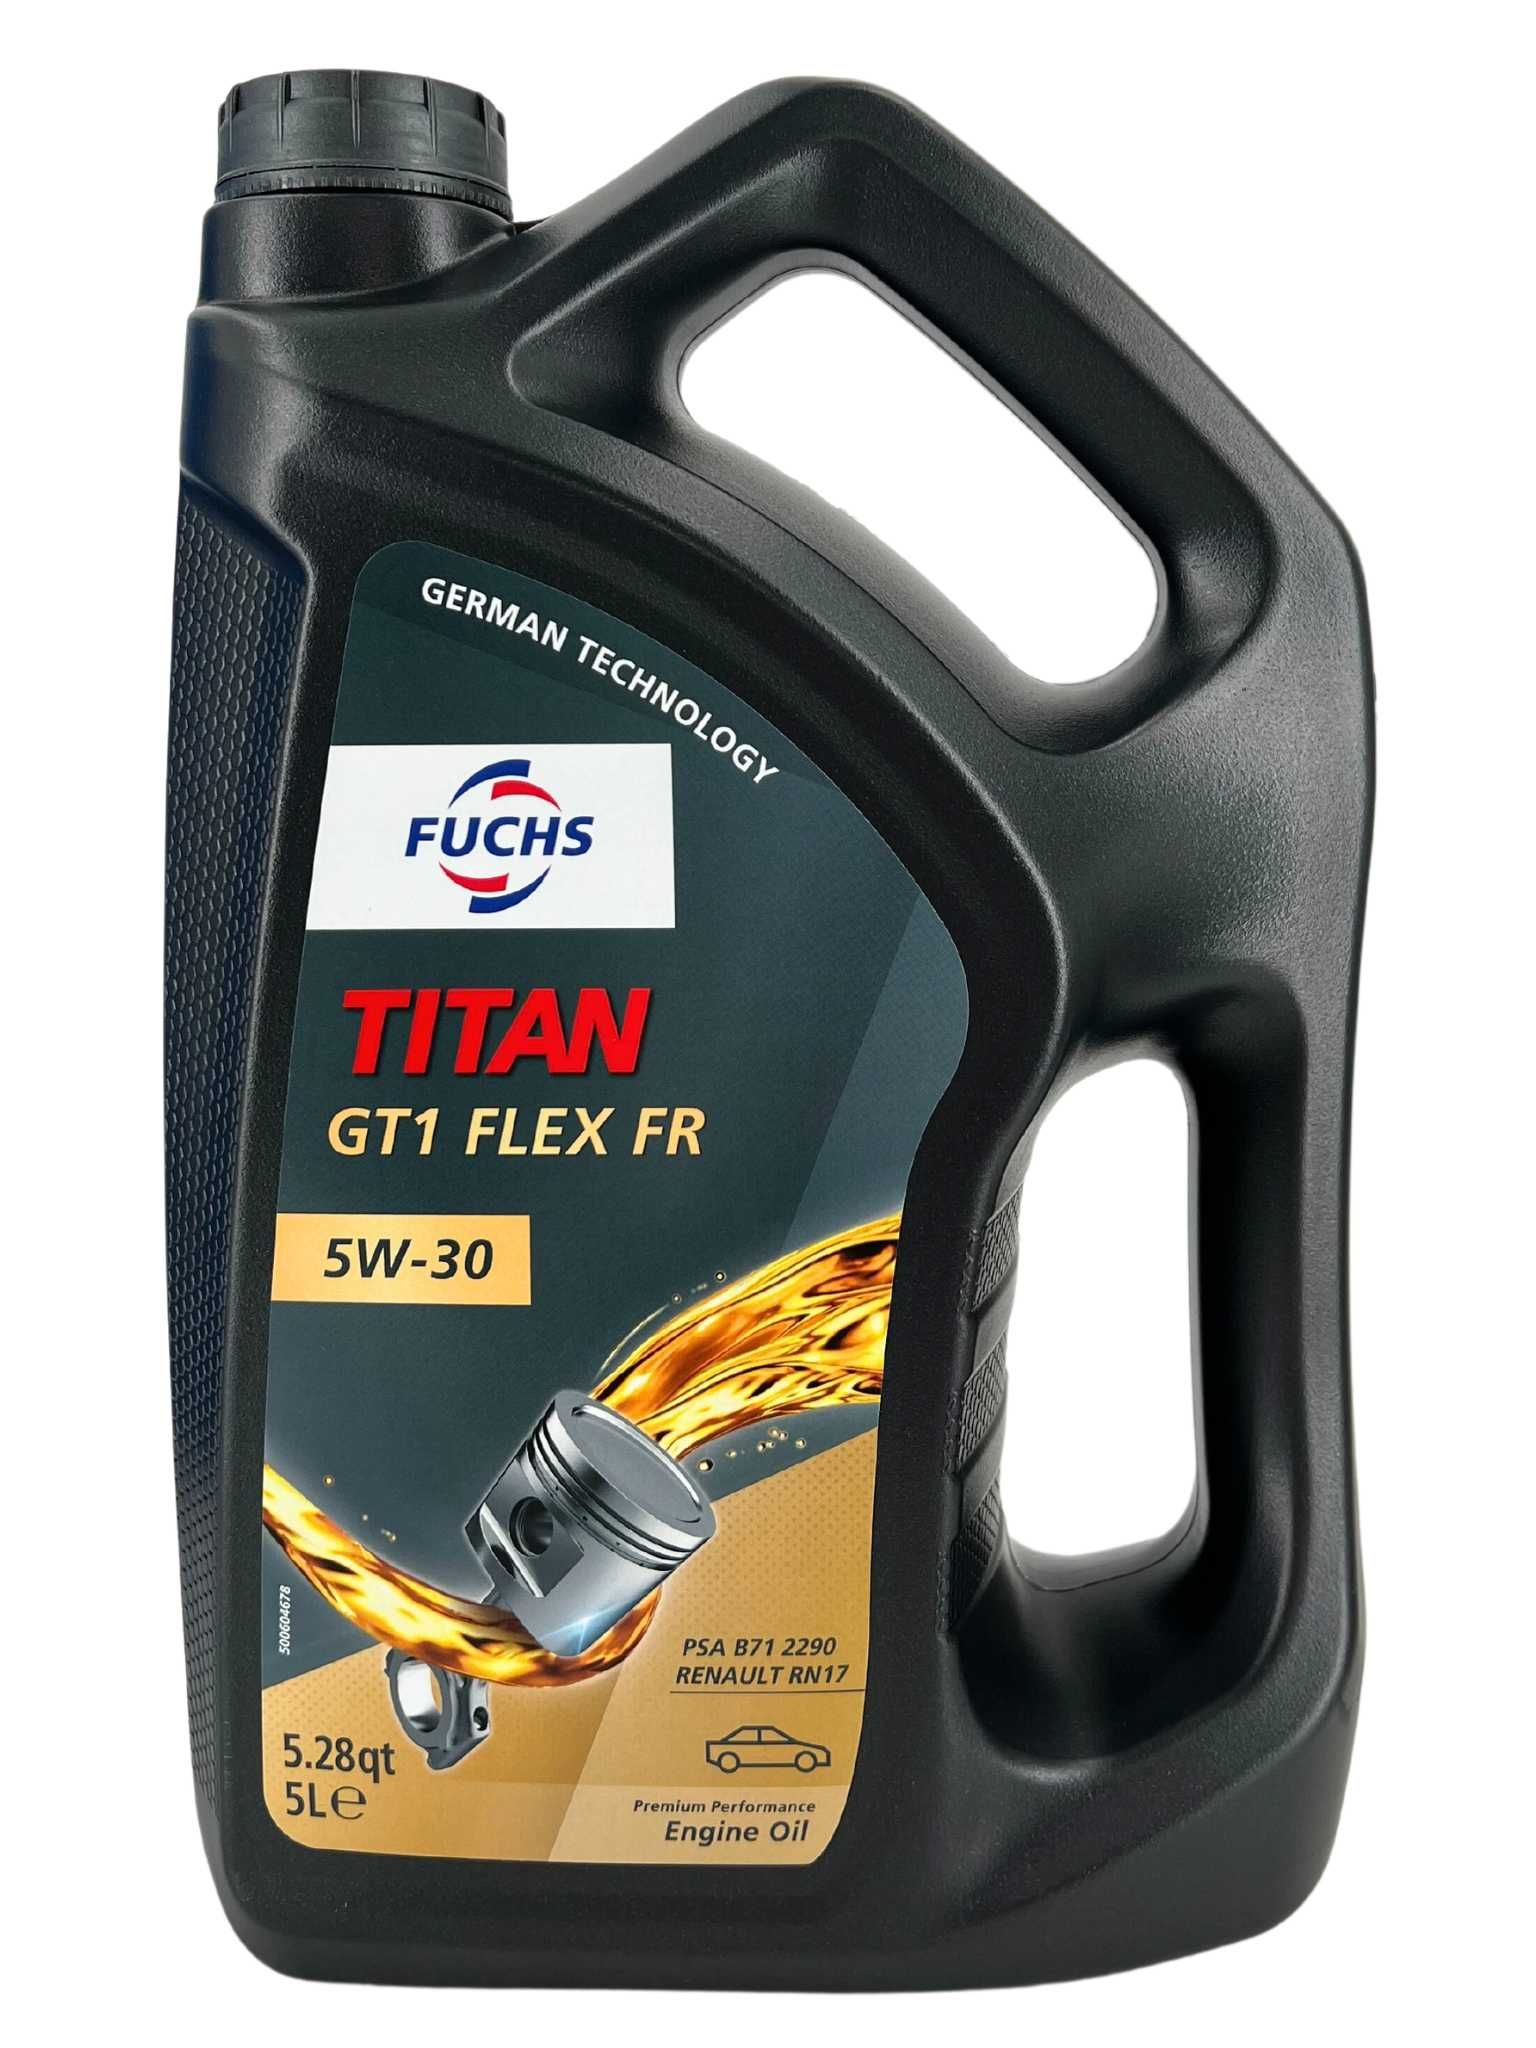 Fuchs Titan GT1 Flex FR 5W-30 5 Liter